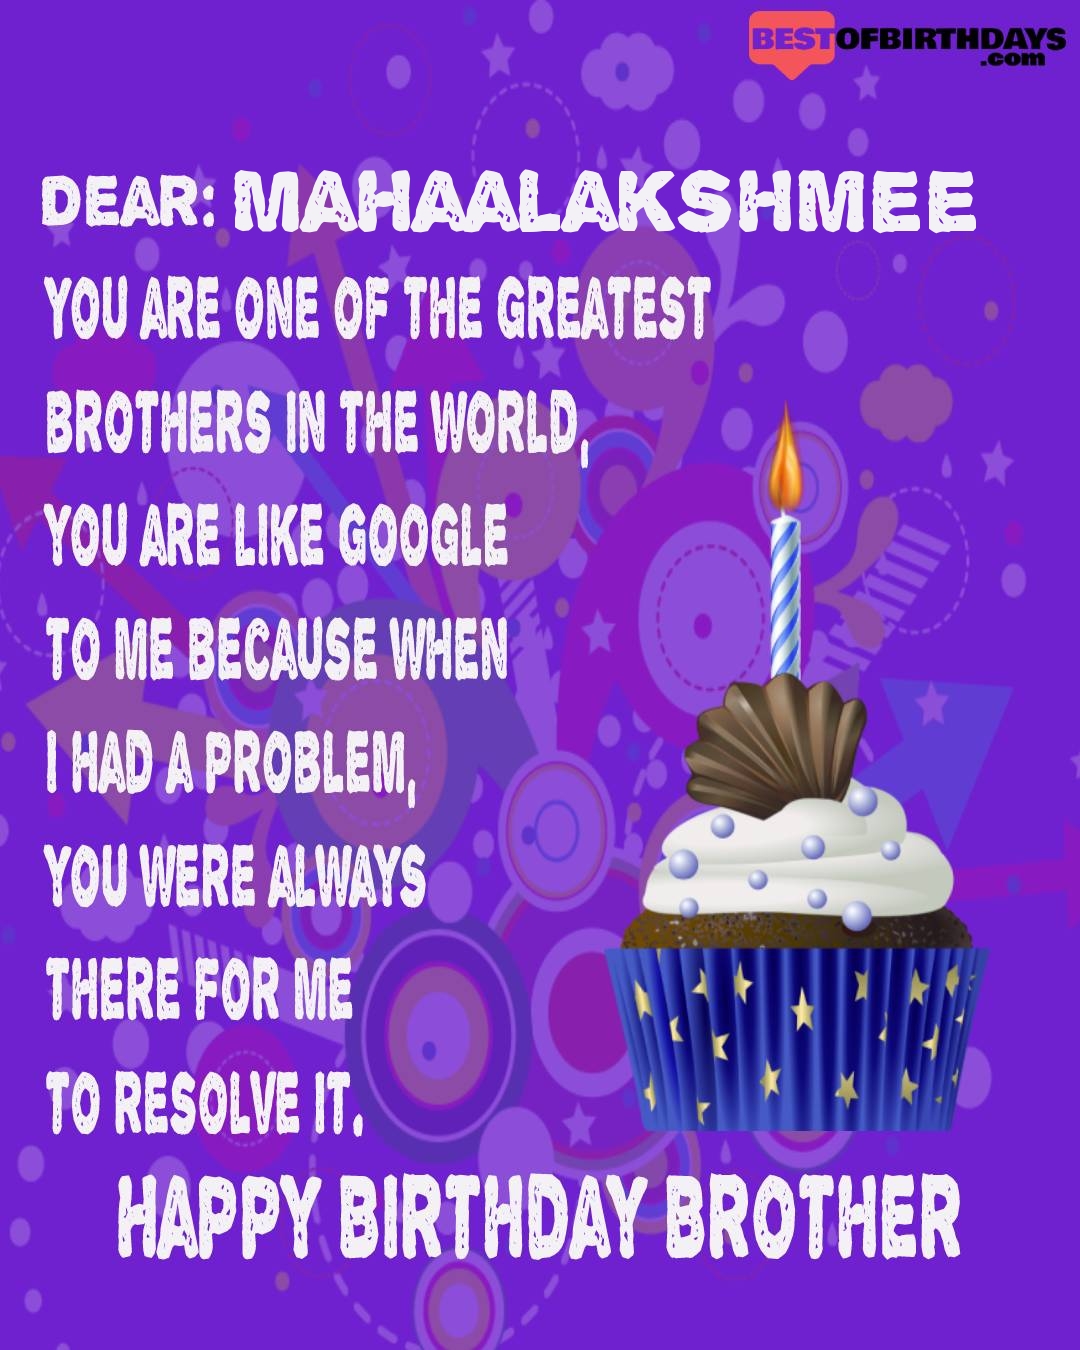 Happy birthday mahaalakshmee bhai brother bro